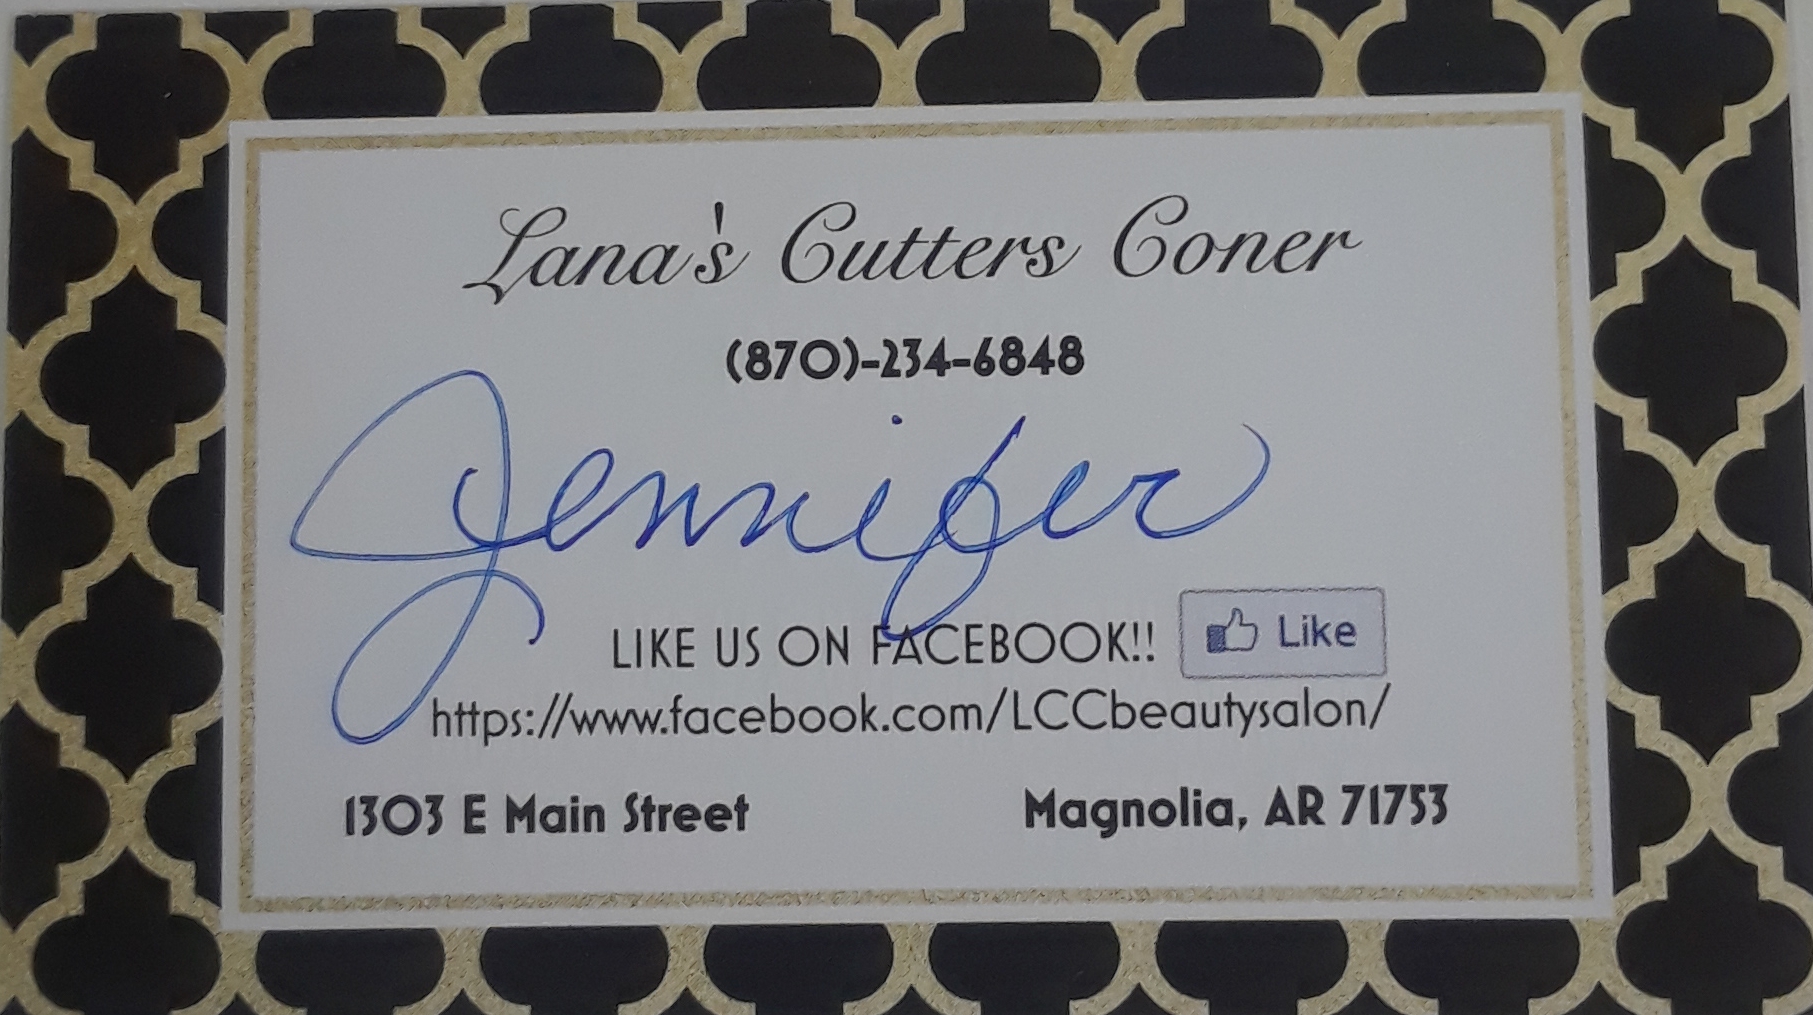 Lana’s Cutters Corner 1303 E Main St, Magnolia Arkansas 71753